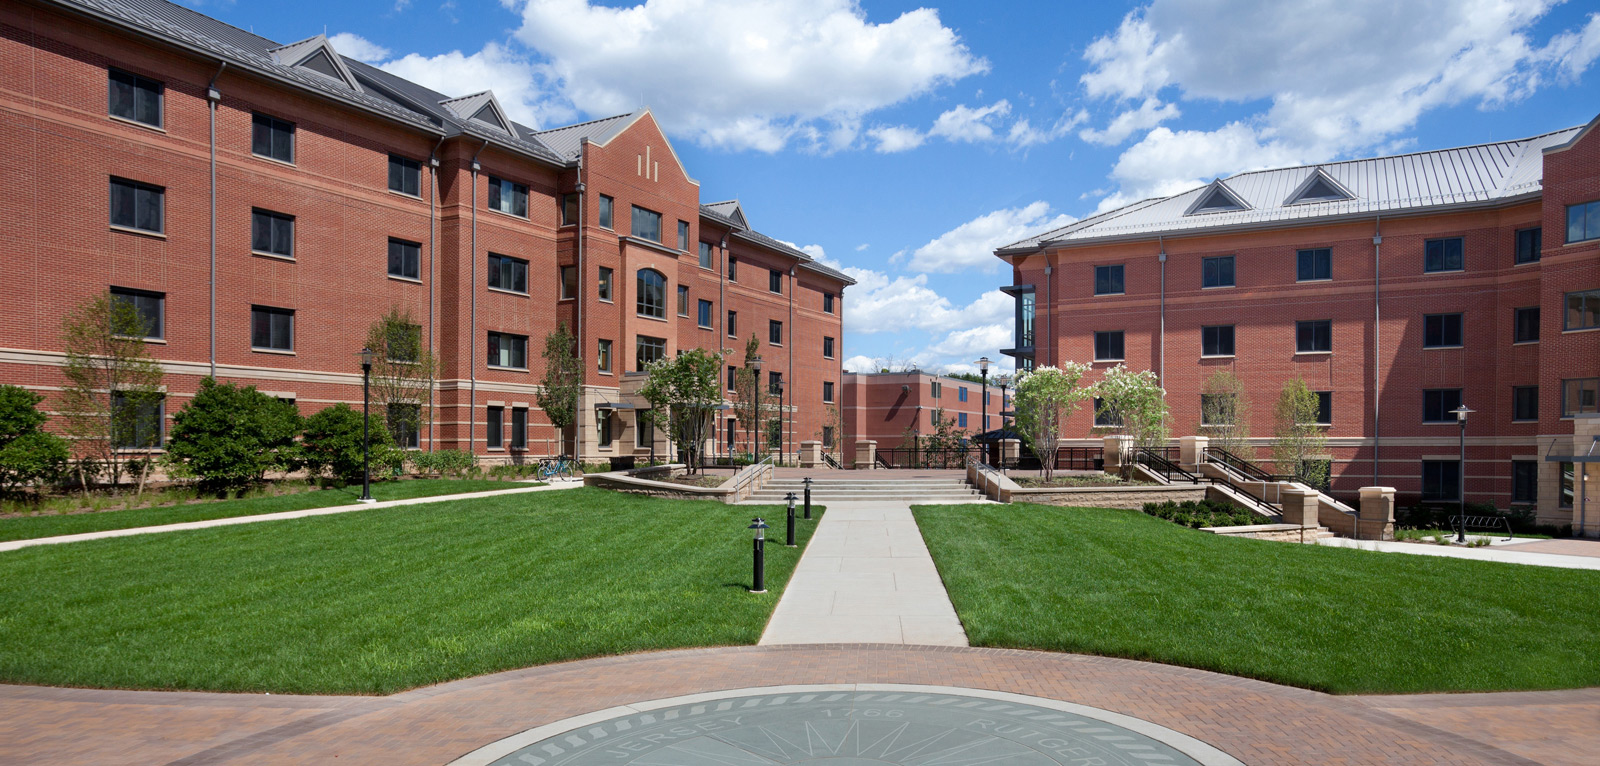 RutgersUniversity_BEST_Courtyard.jpg